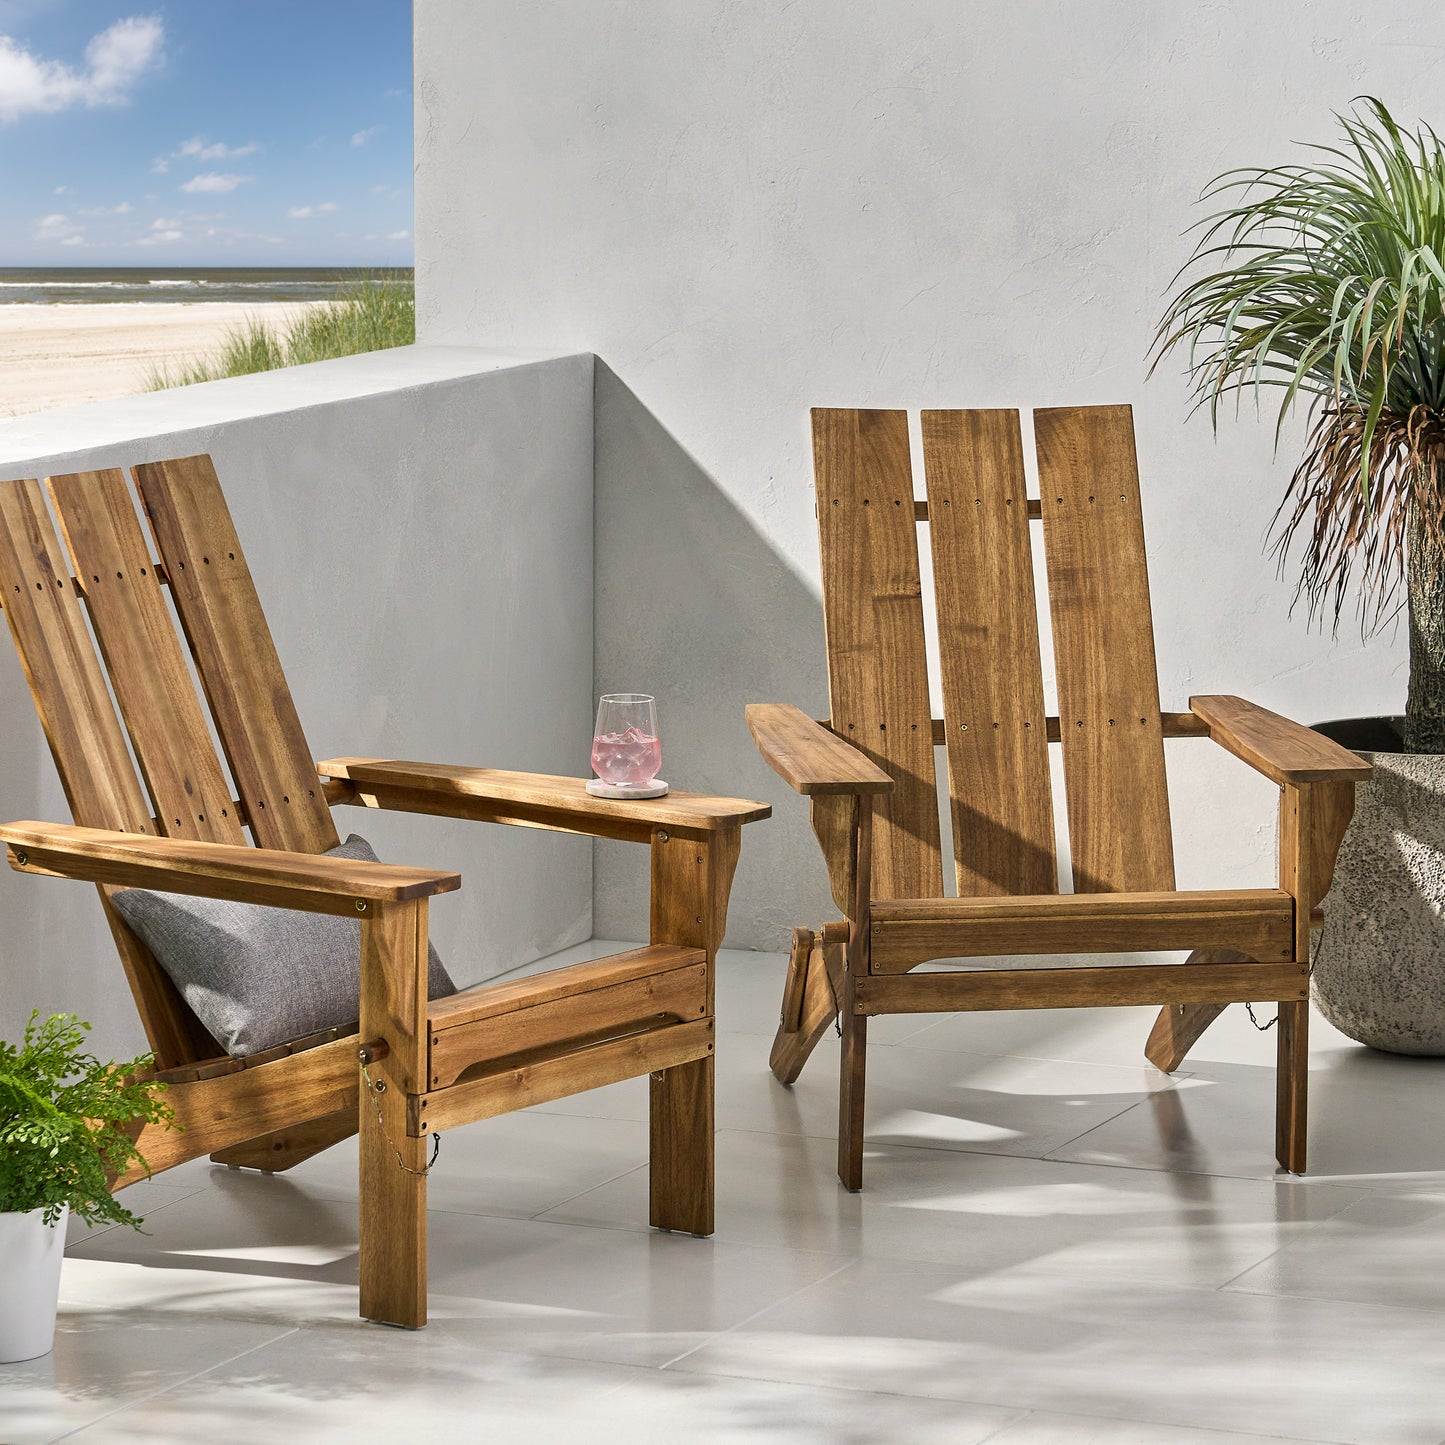 Gurekam Outdoor Acacia Wood Foldable Adirondack Chairs, Set of 2